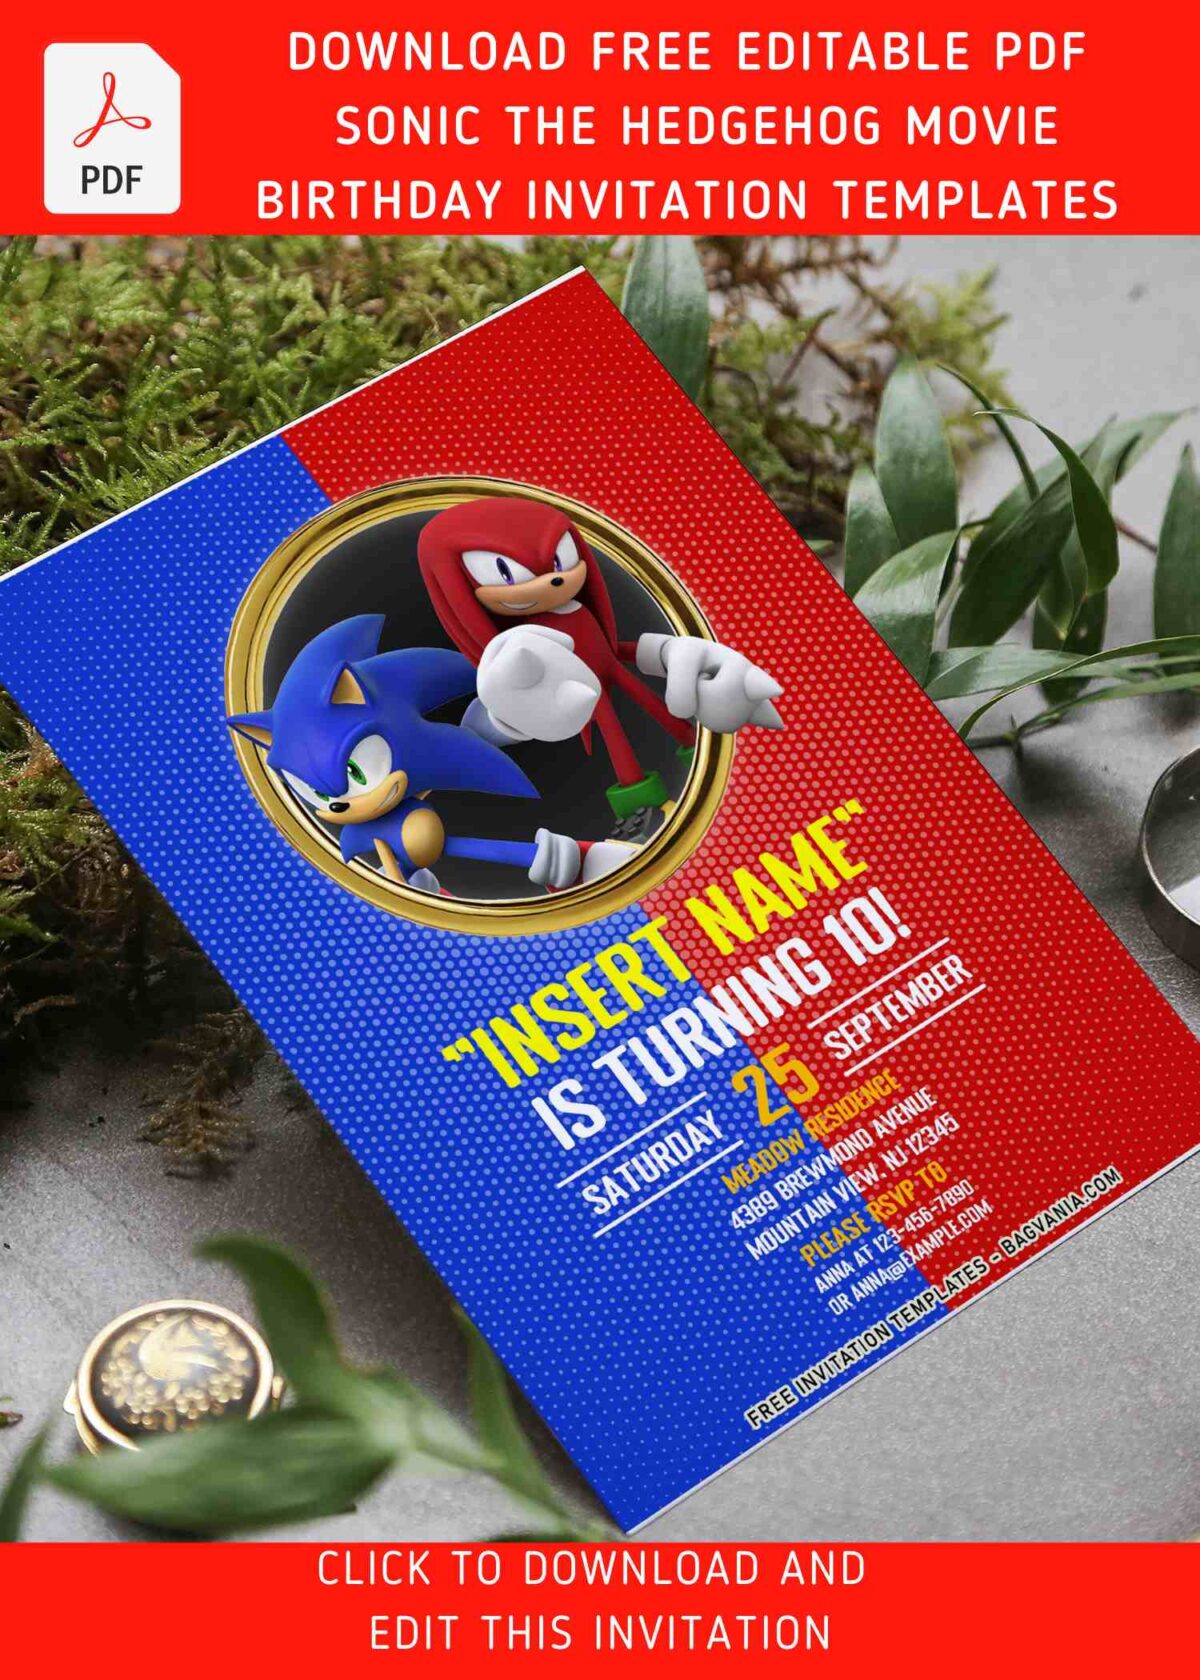 (Free Editable PDF) Sonic The Hedgehog Movie Themed Birthday Invitation Templates with 